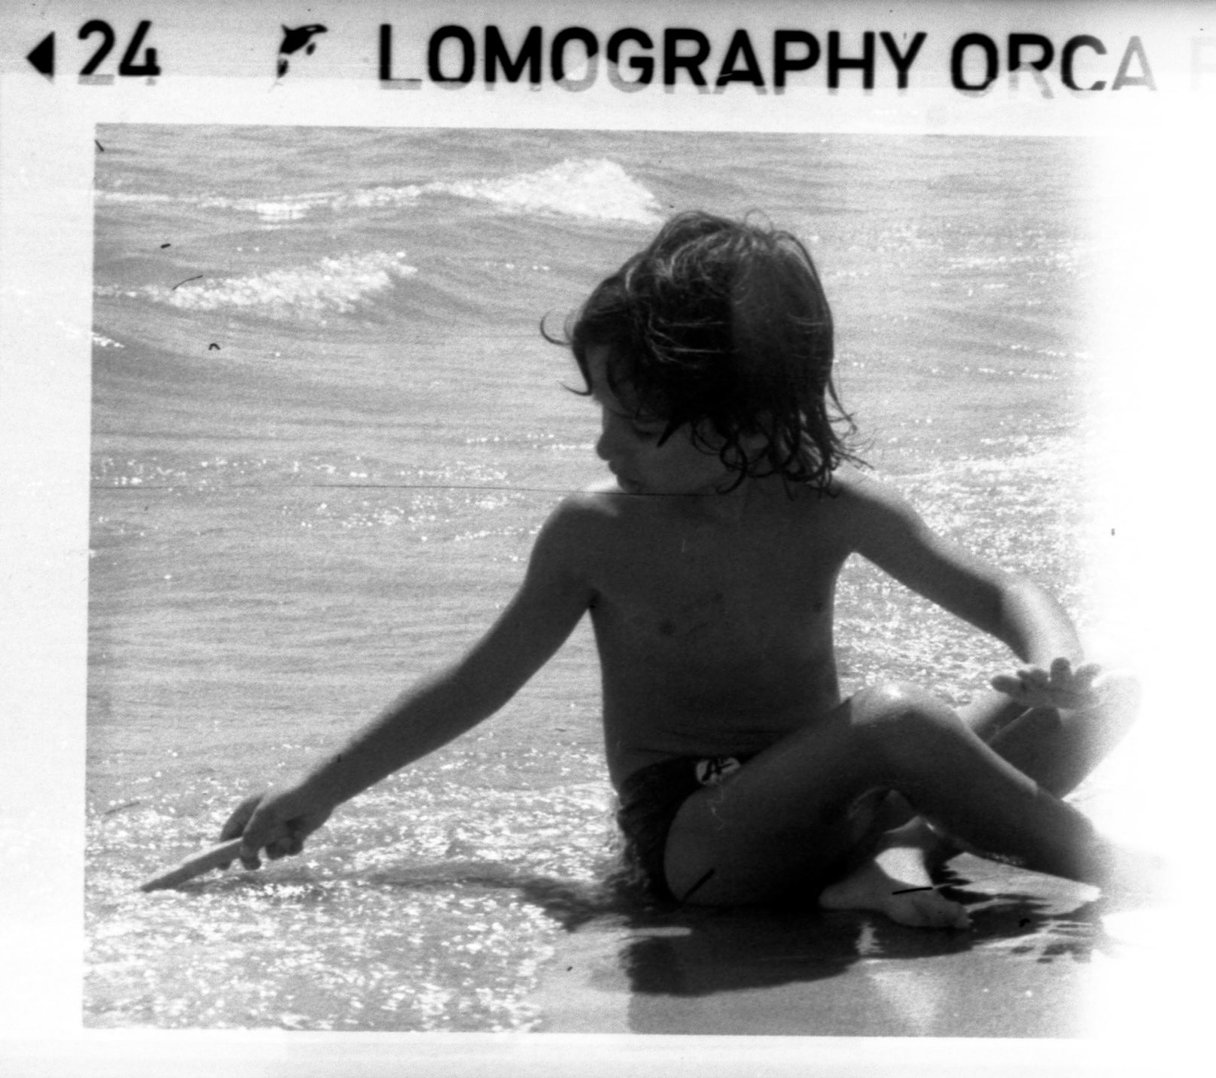 LOMOGRAPHY ORCA 100 B&W (110)